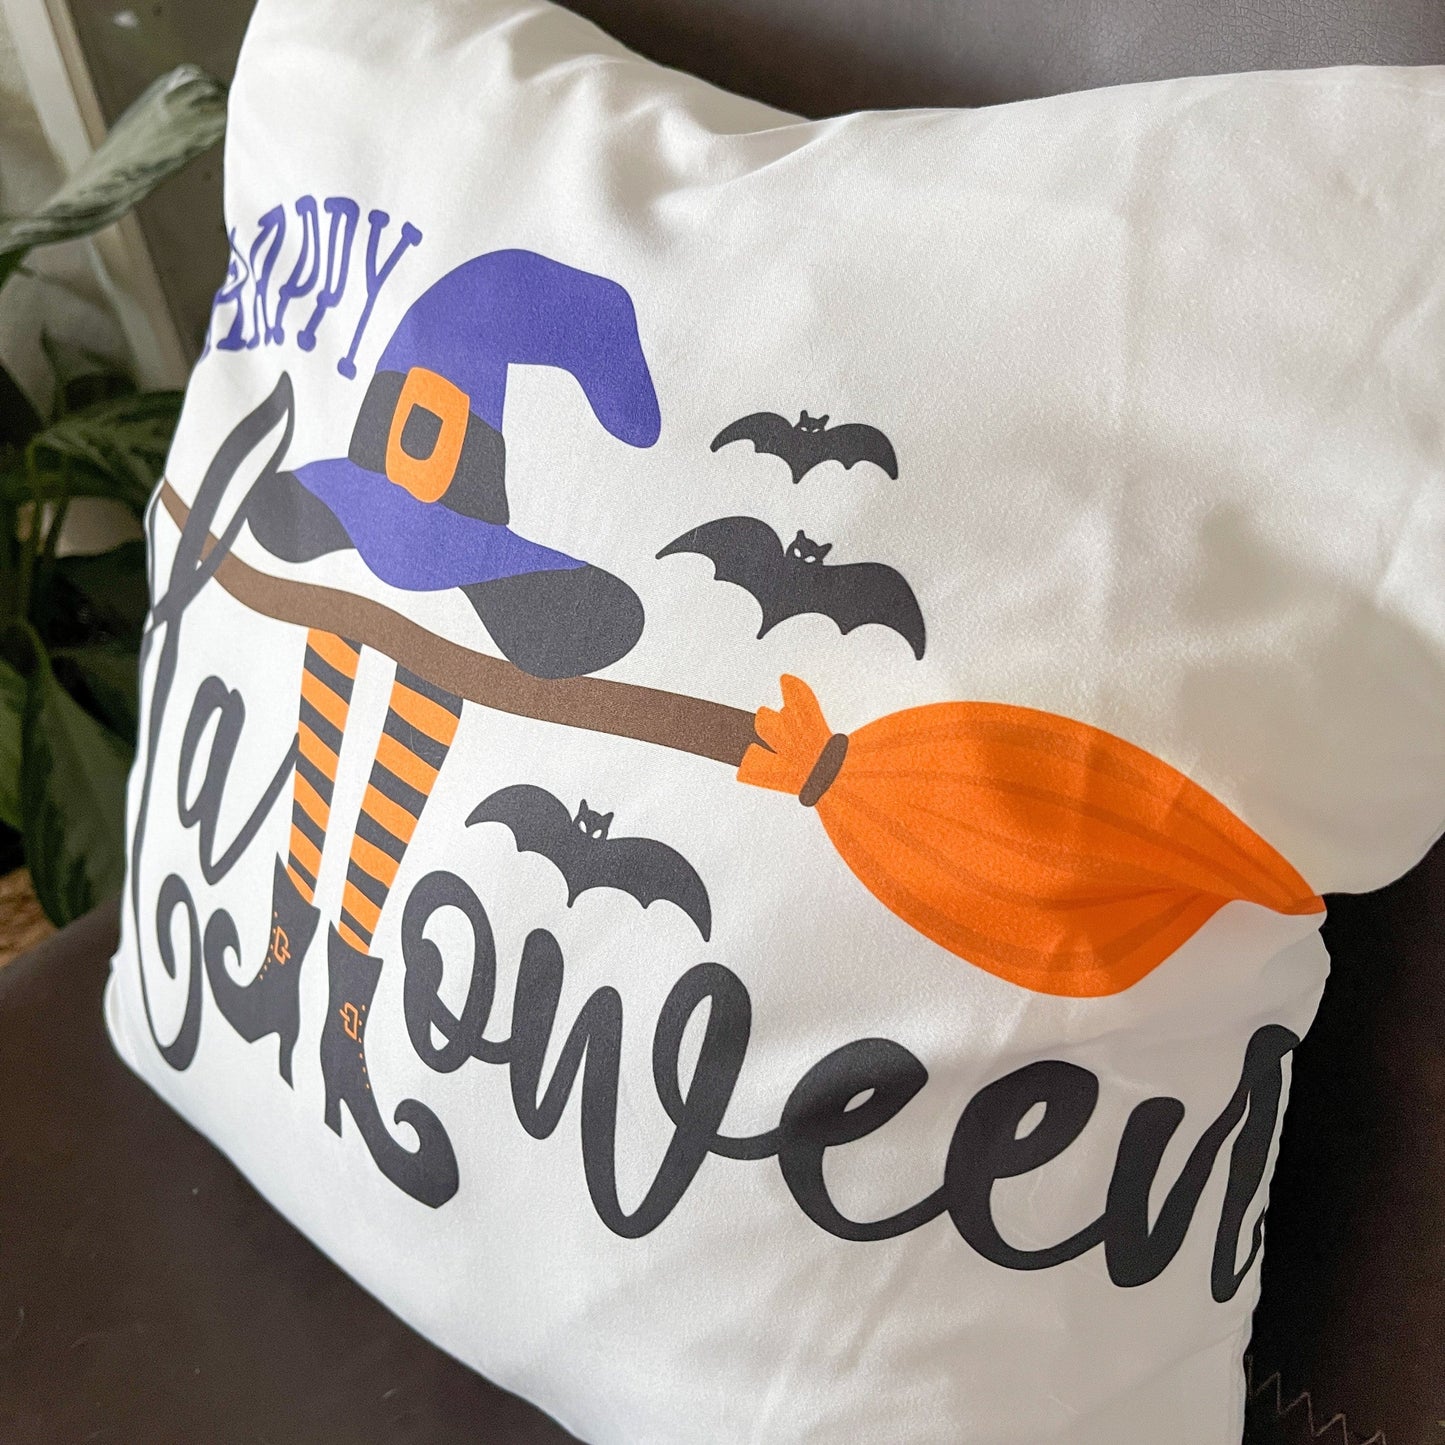 Halloween Pillow Covers - Throw Pillows